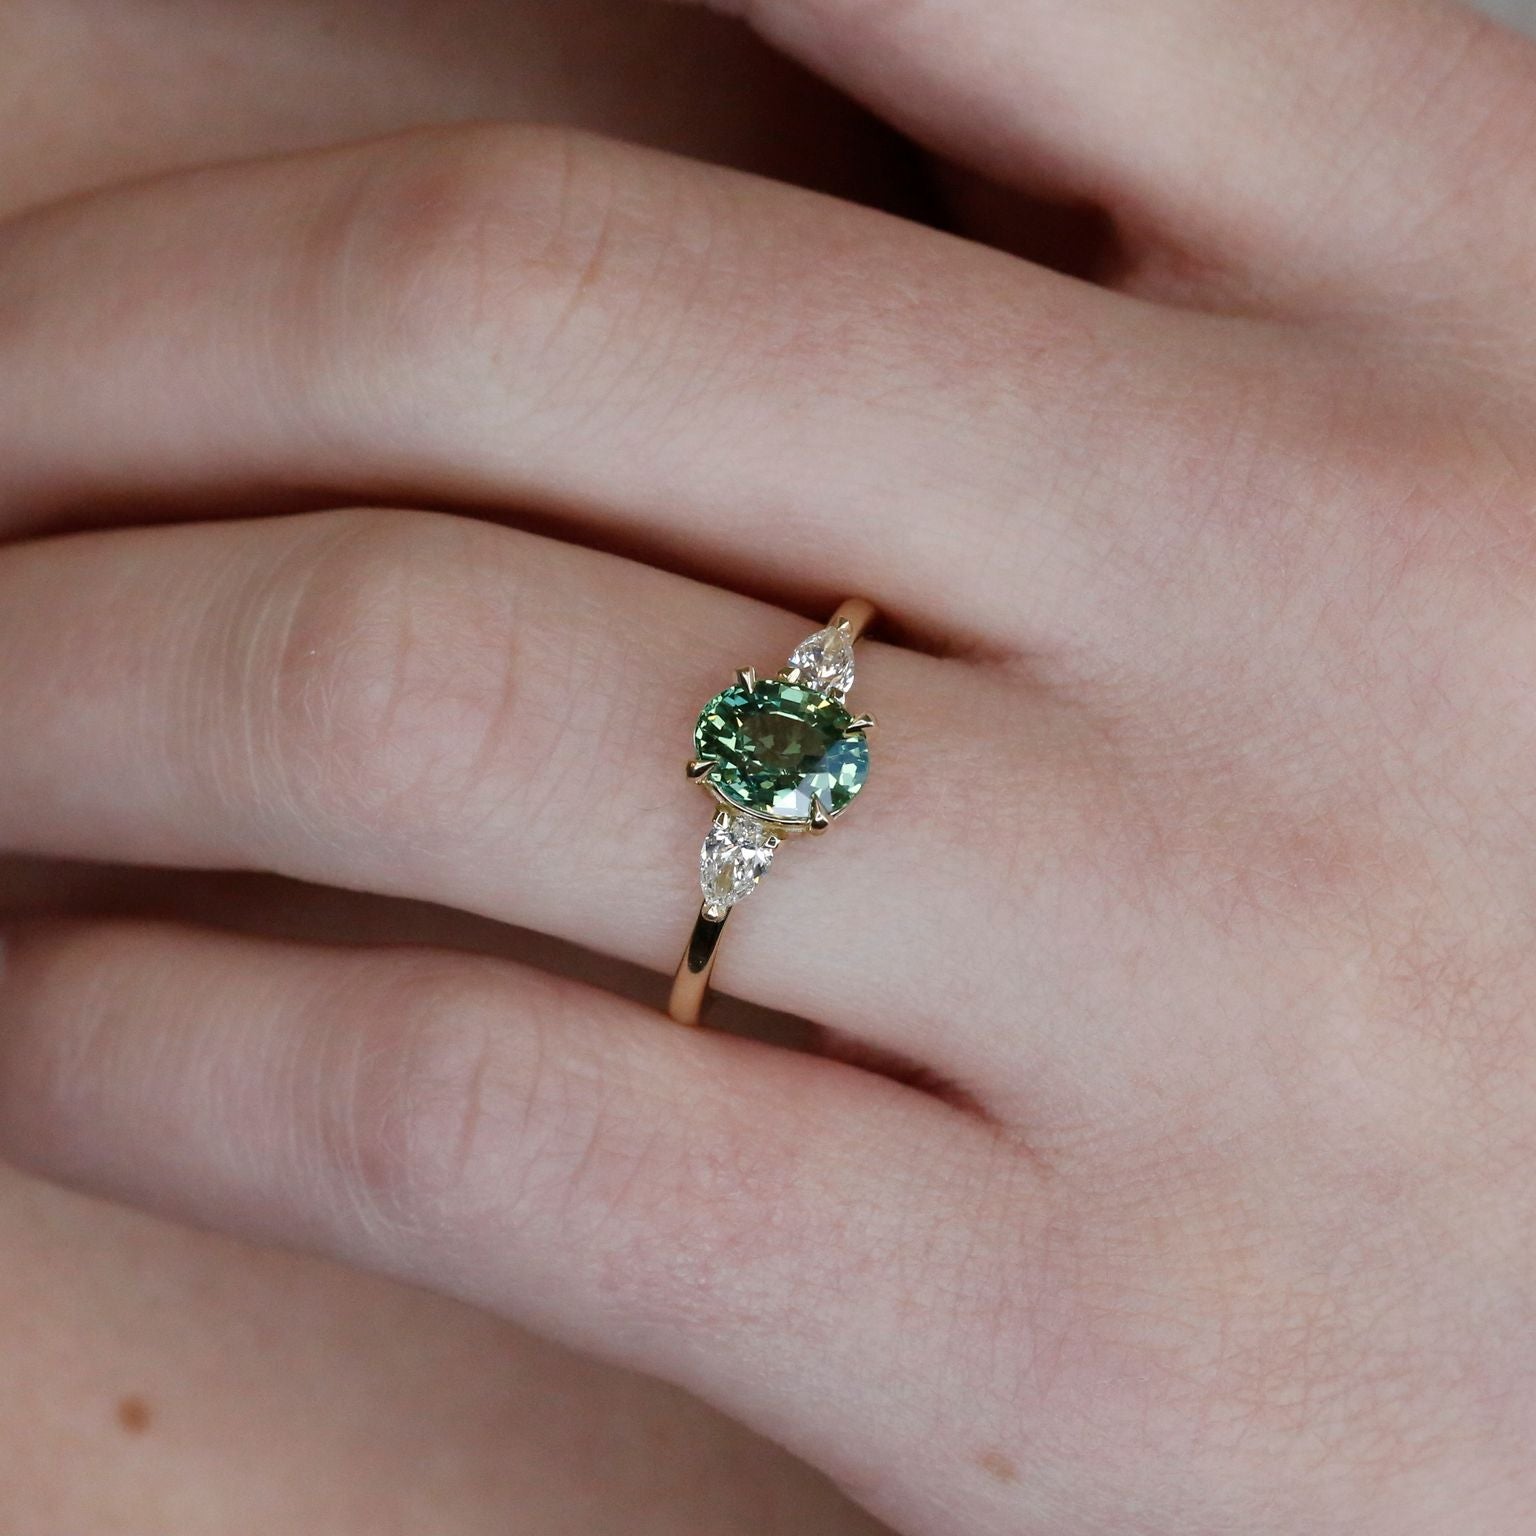 Green Montana Sapphire Distance Ring | Engagement rings sapphire, Ring  trends, Cute engagement rings